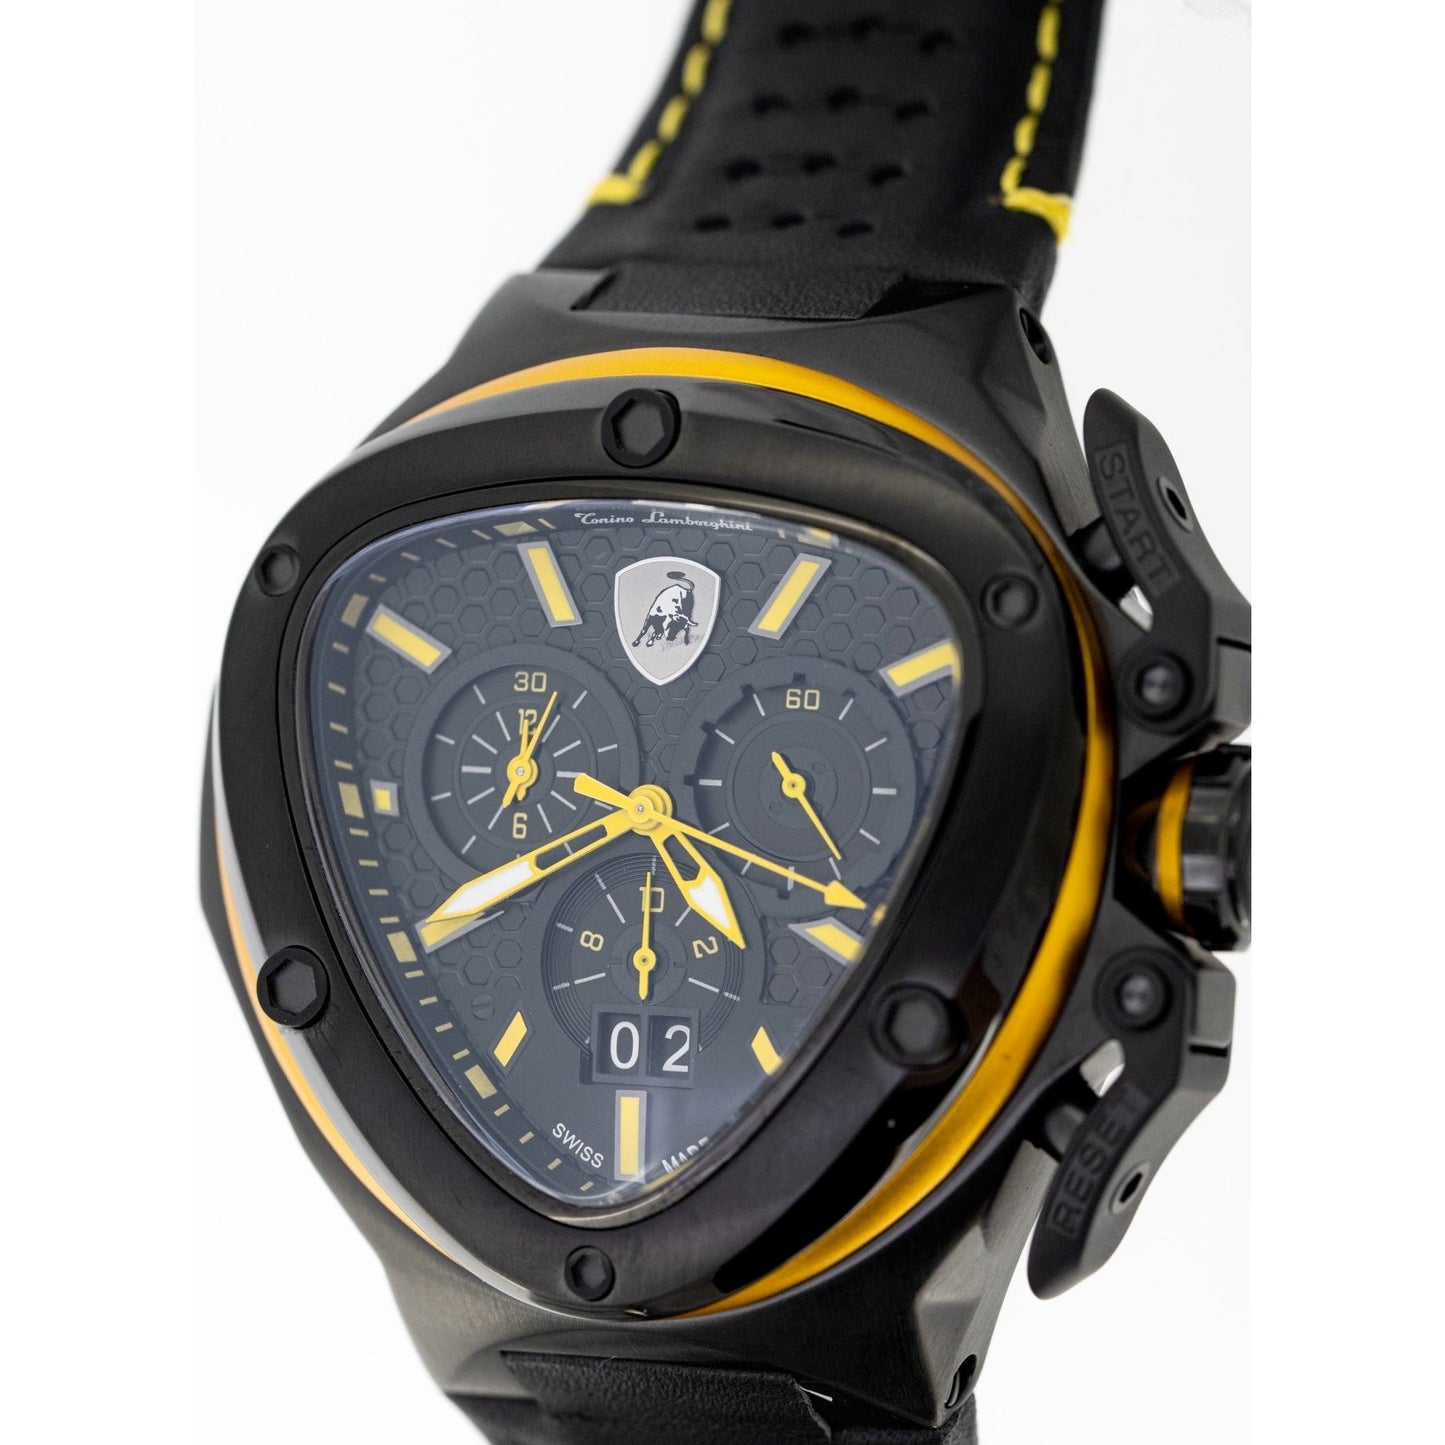 TONINO LAMBORGHINI Spyder Black Yellow Trim Watch